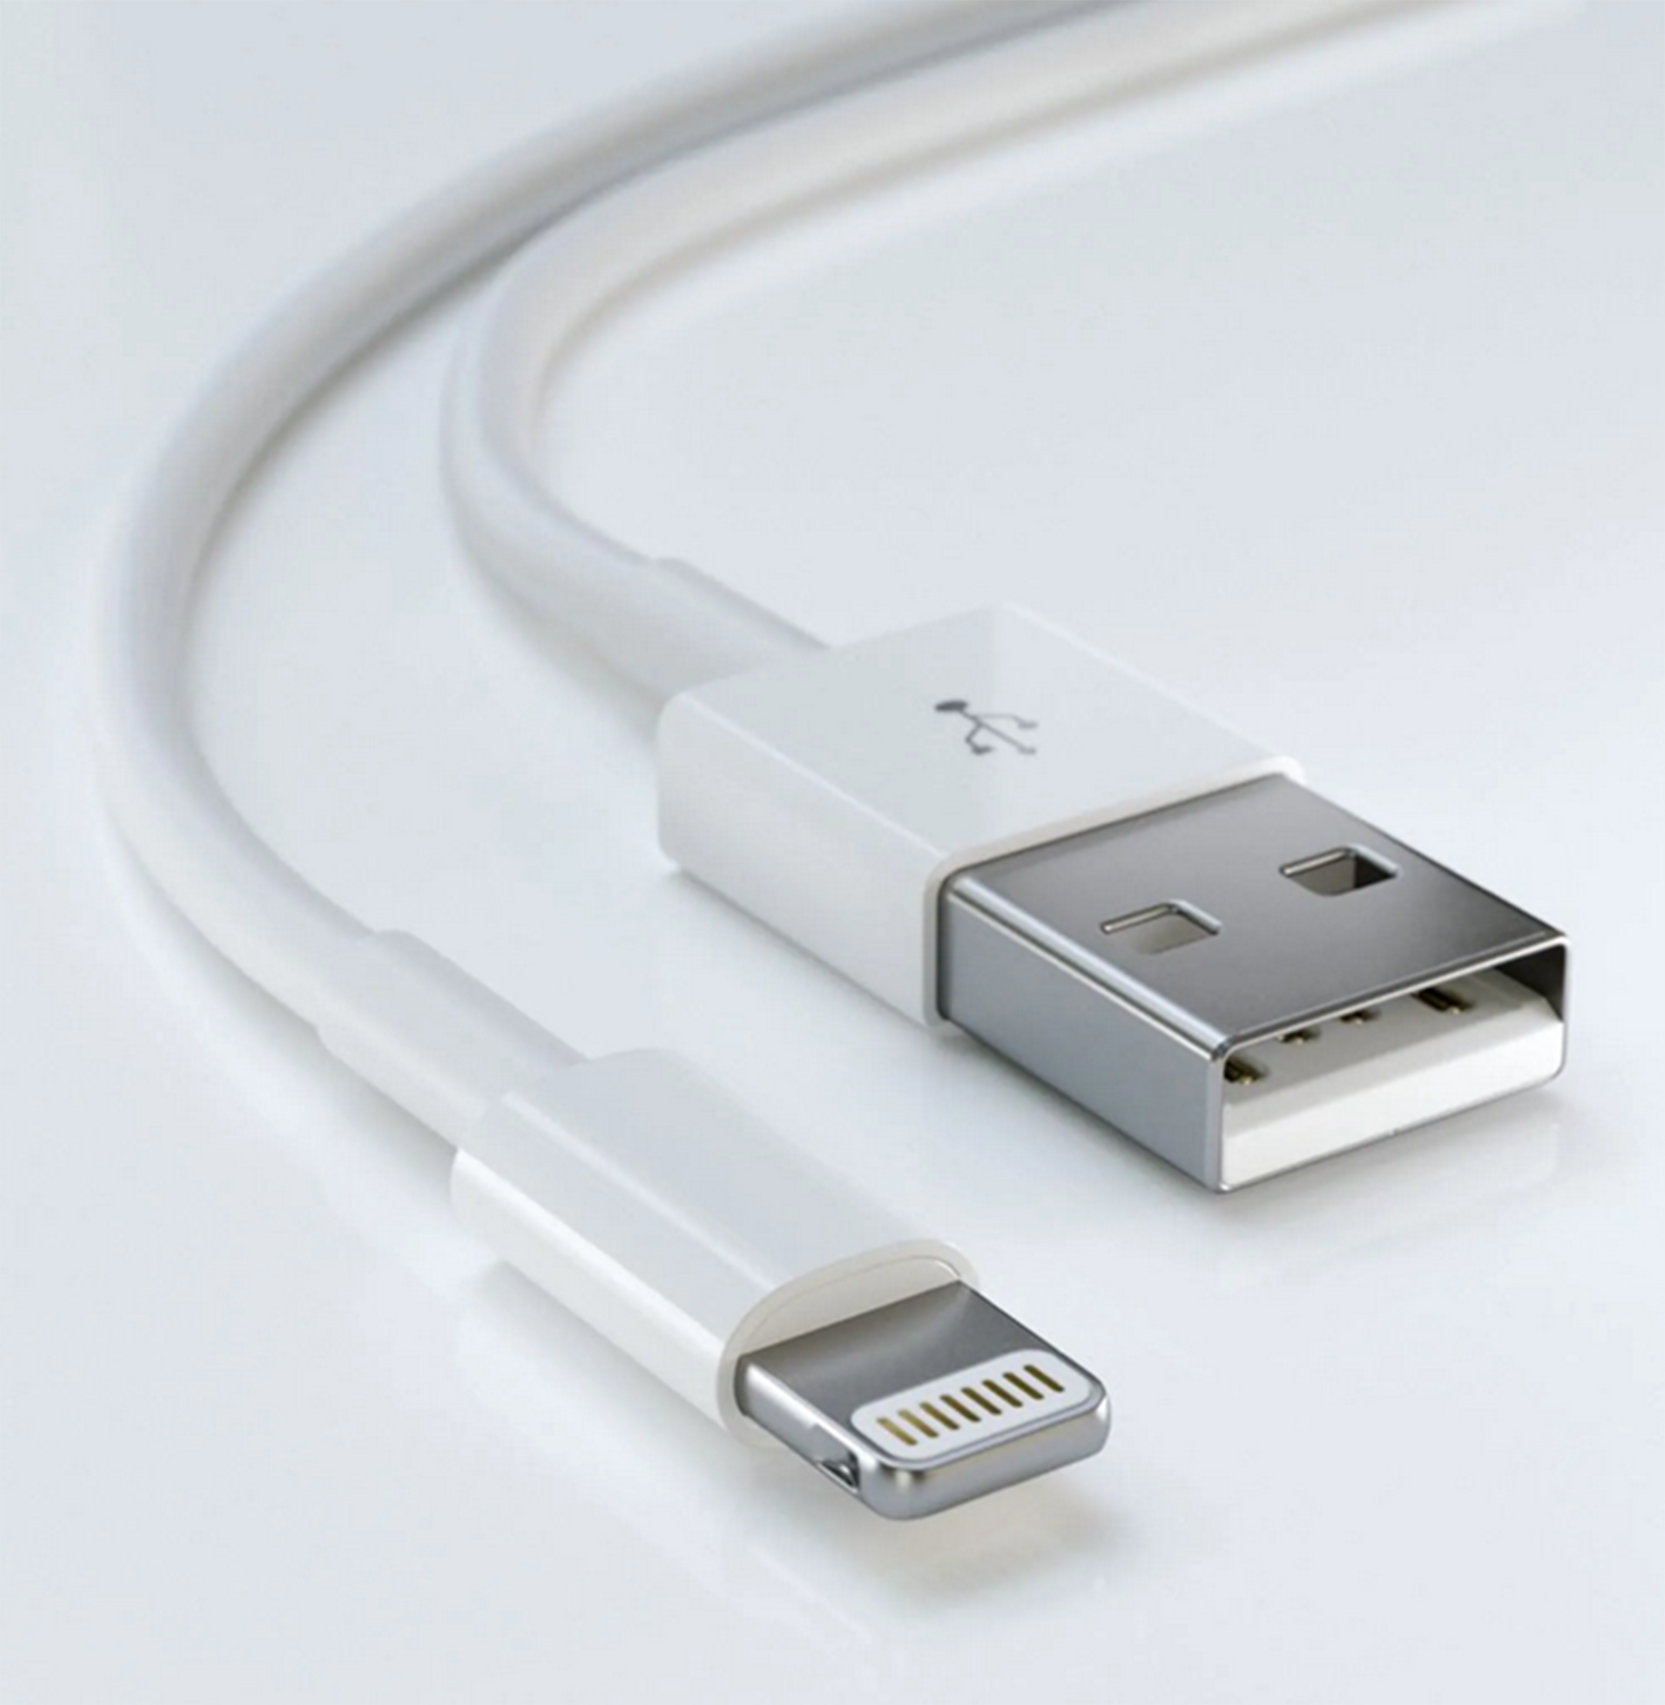 3x iPhone SE Lightning auf USB Kabel 2m Ladekabel